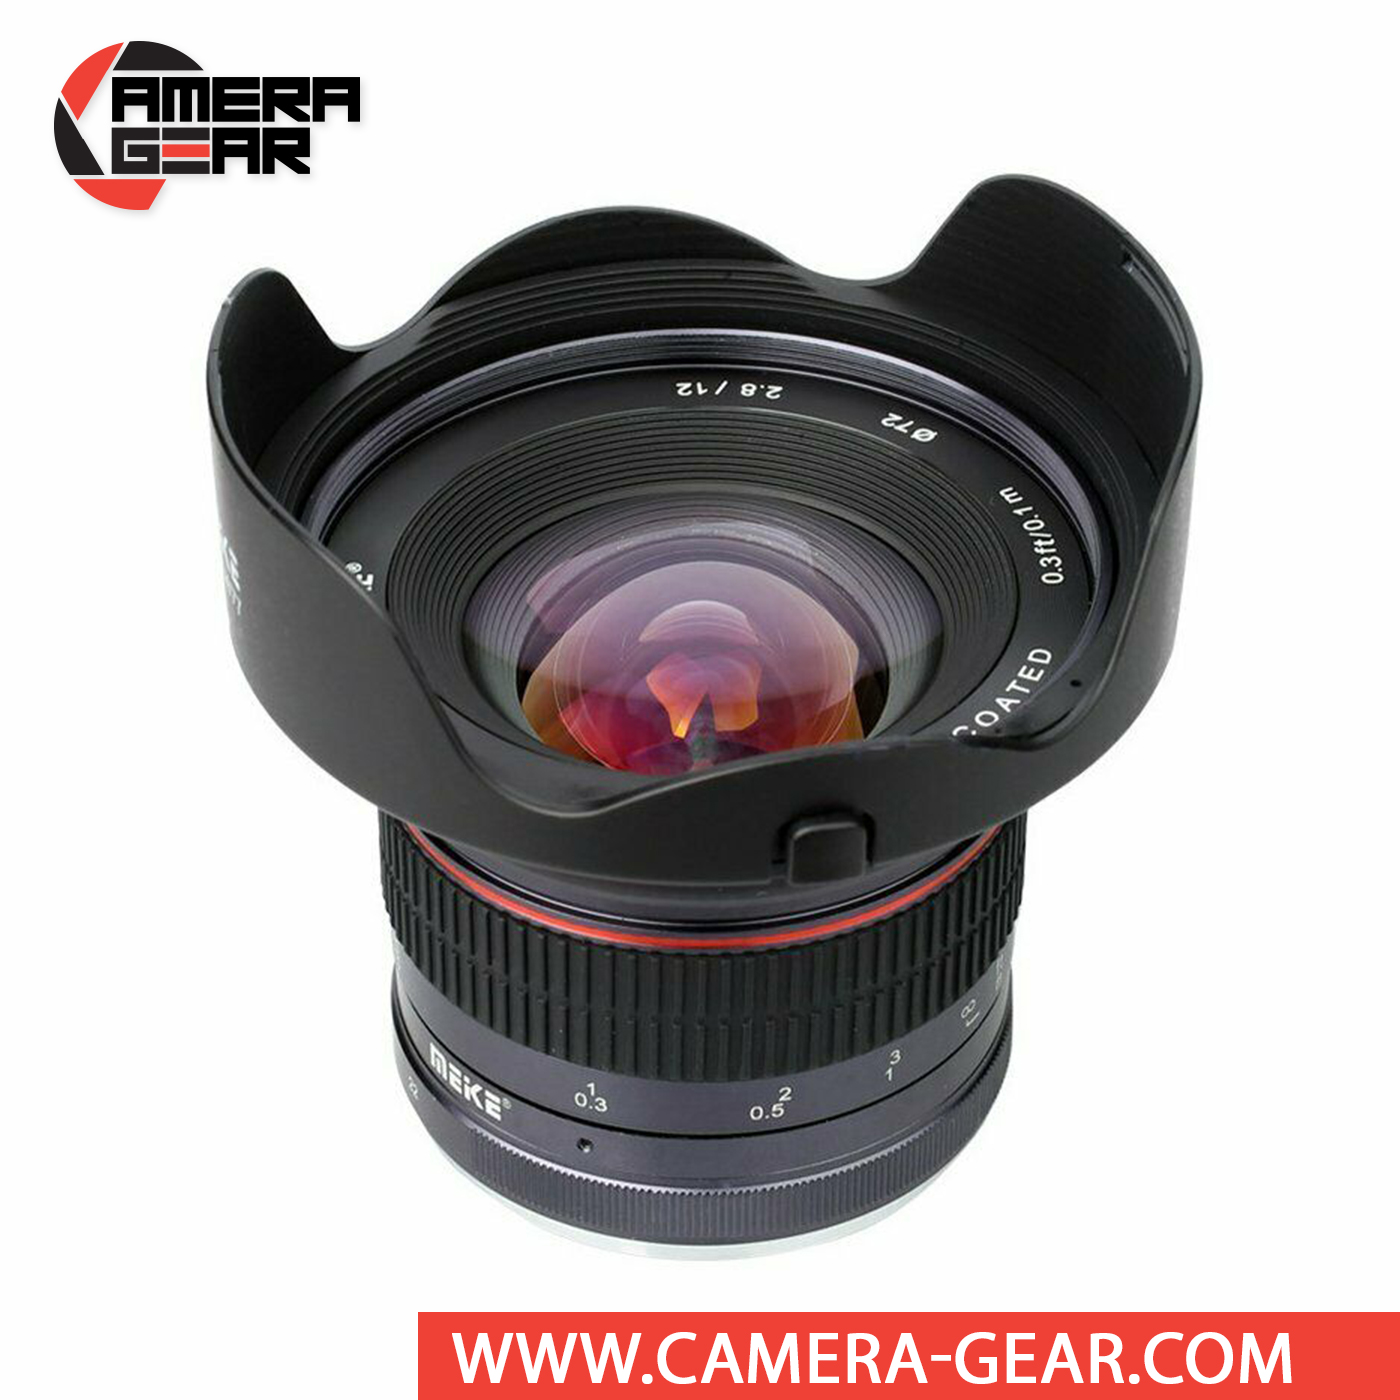 Rubriek China Sluit een verzekering af Meike 12mm f/2.8 Lens for Fuji X Mount Cameras - Camera Gear